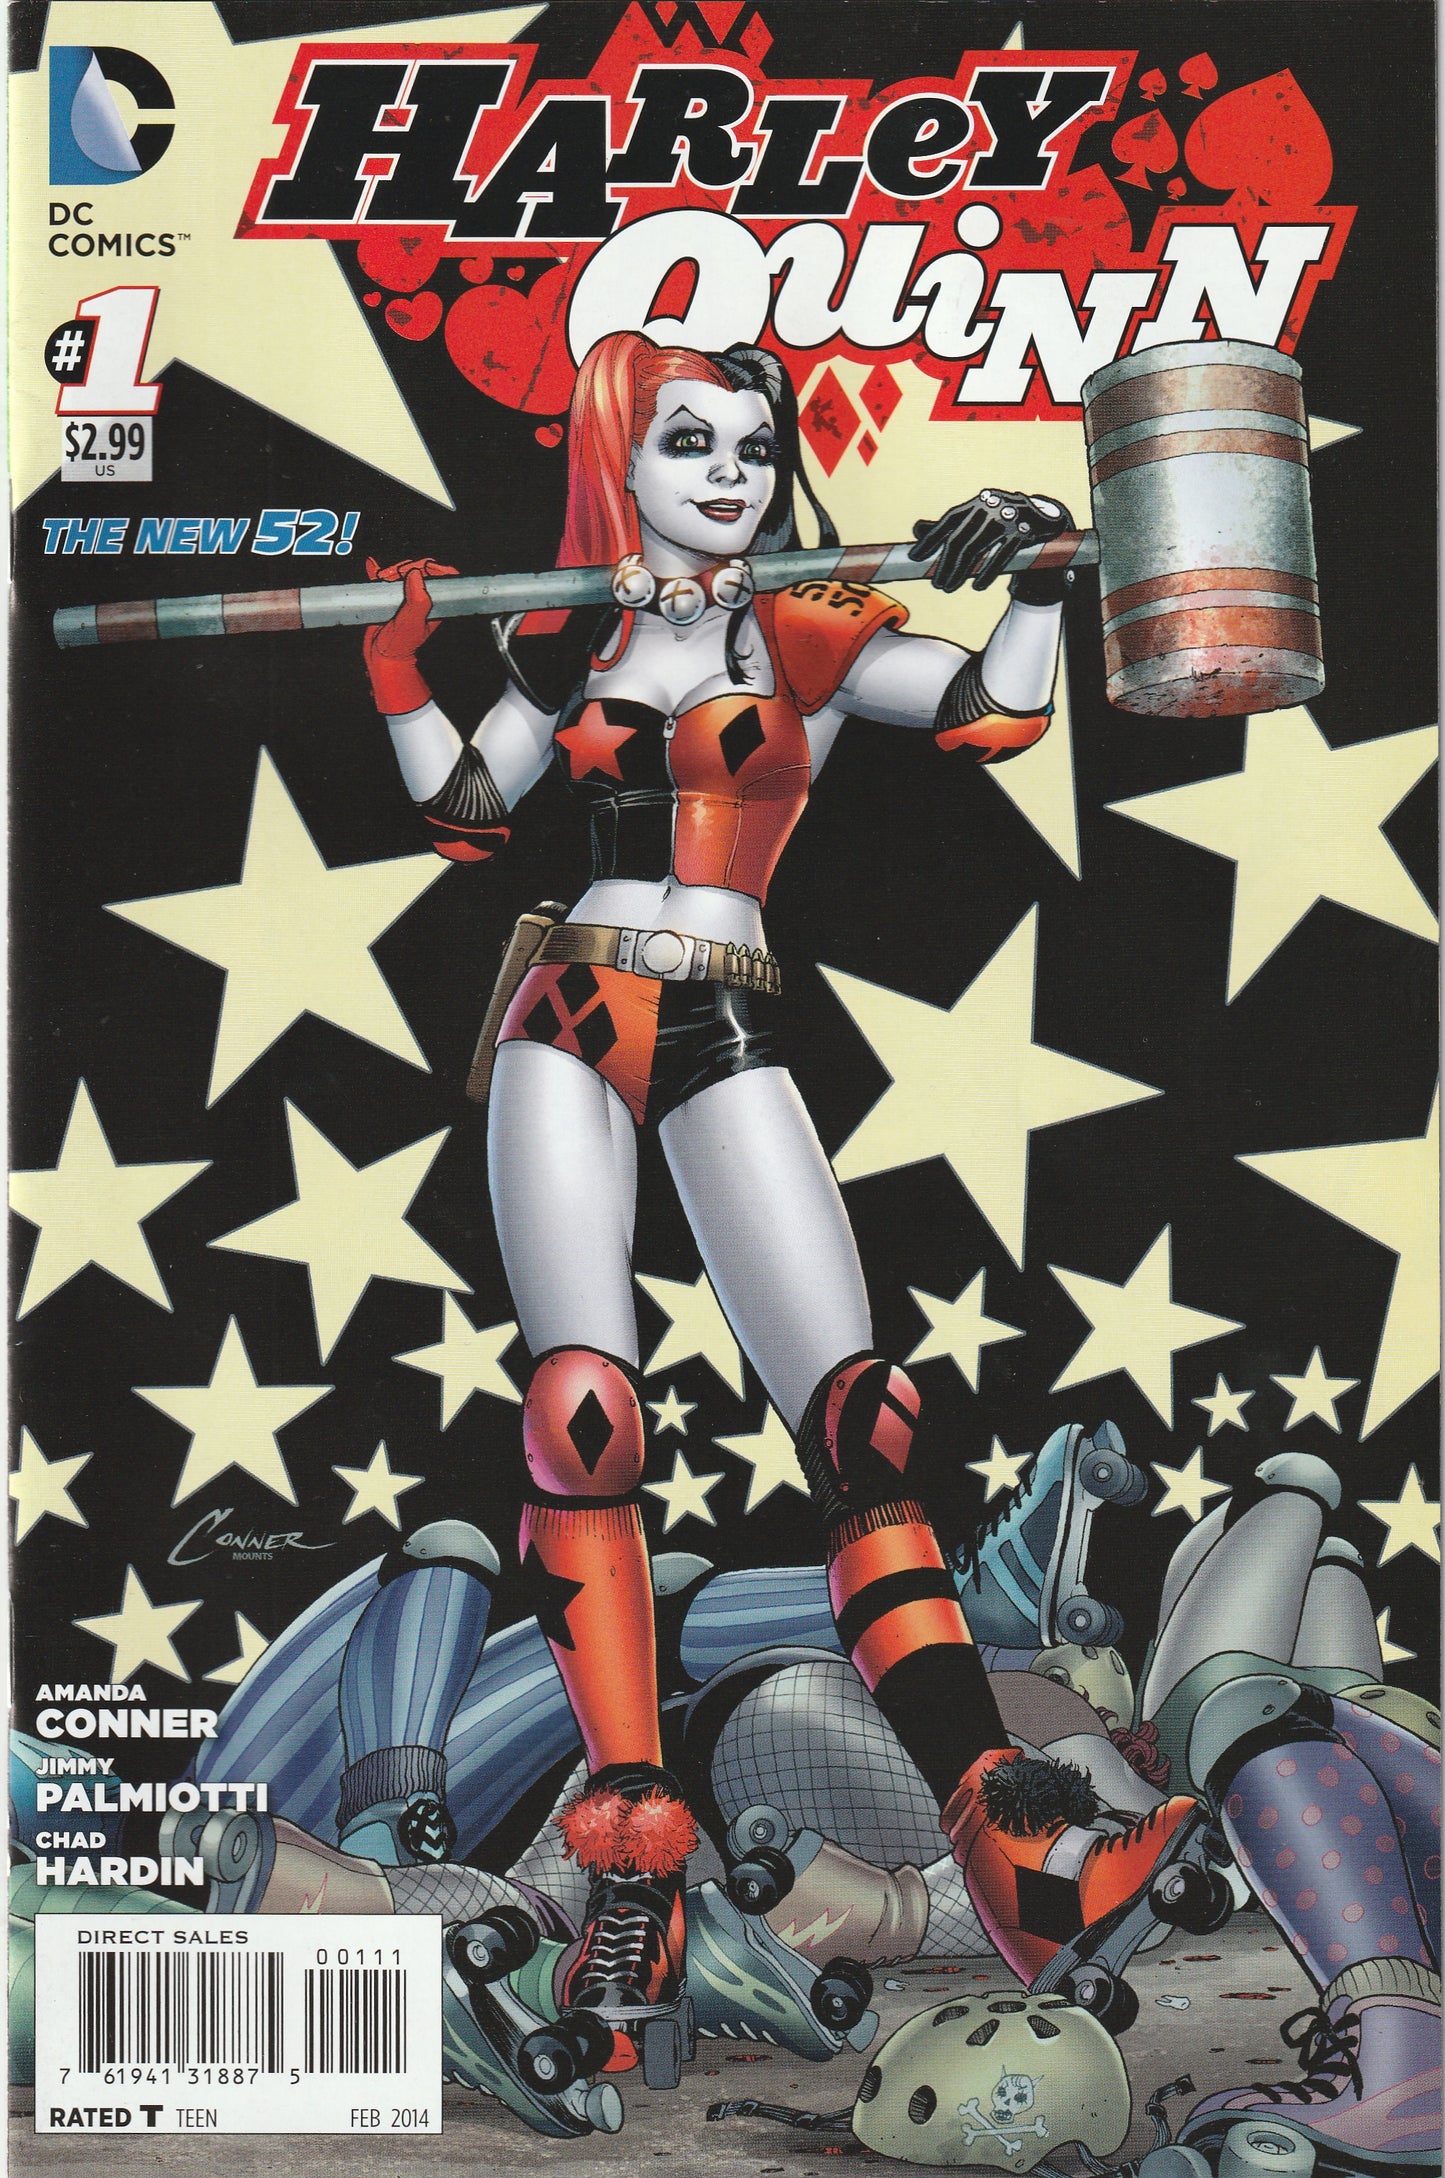 Harley Quinn #1 (Vol 2, 2014)